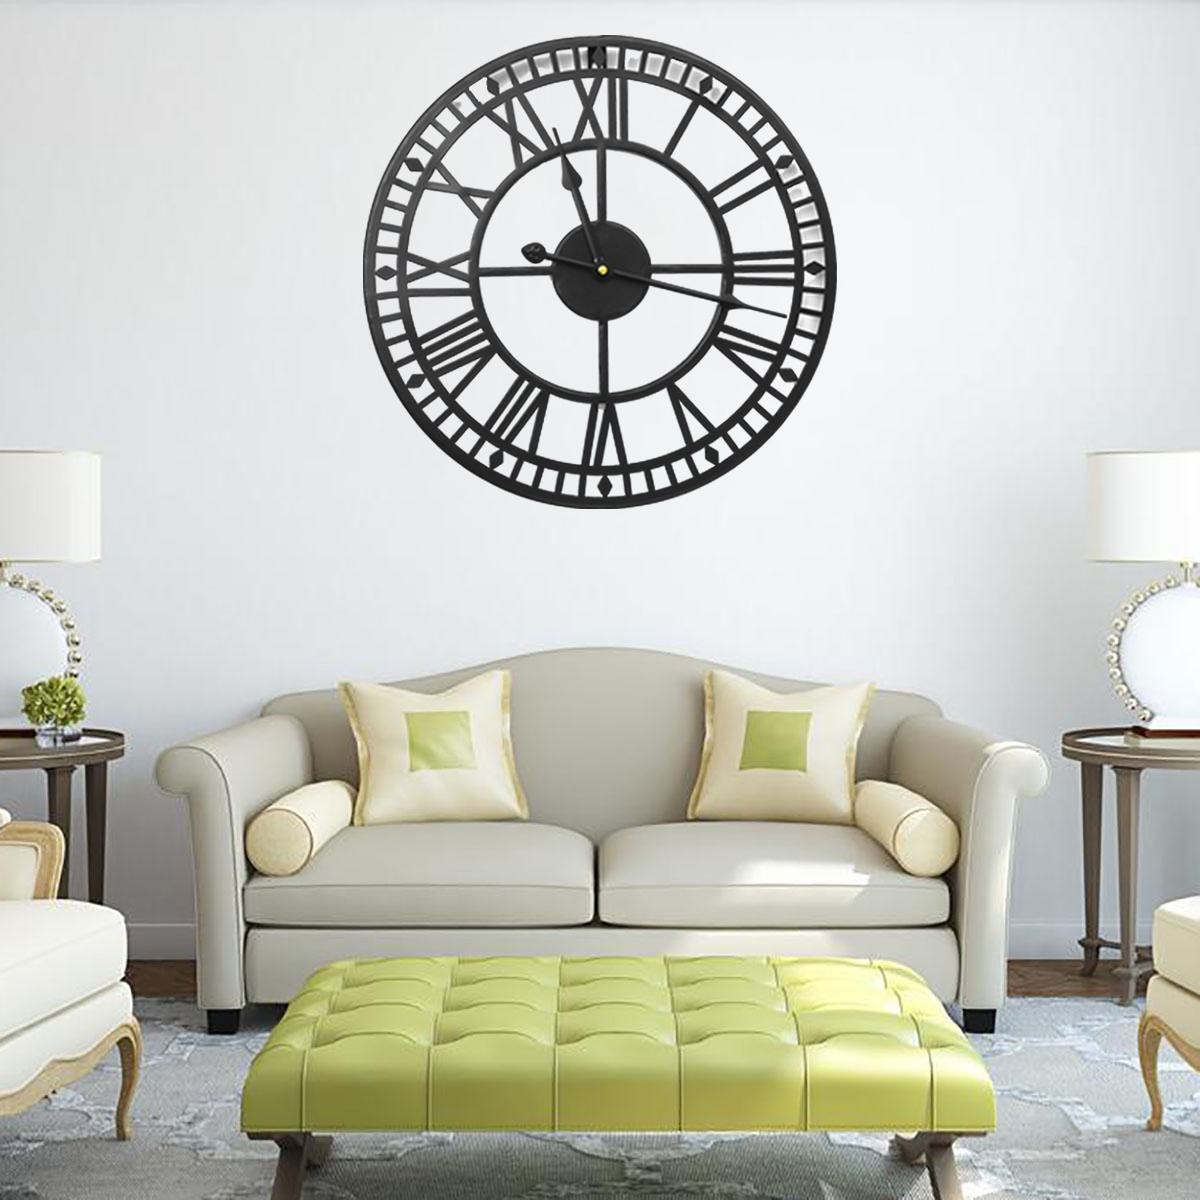 3D Circular Retro Roman Wall Clocks Wrought Hollow Iron Vintage Large Mute Decorative Wall Clock Home Living Room Decoration